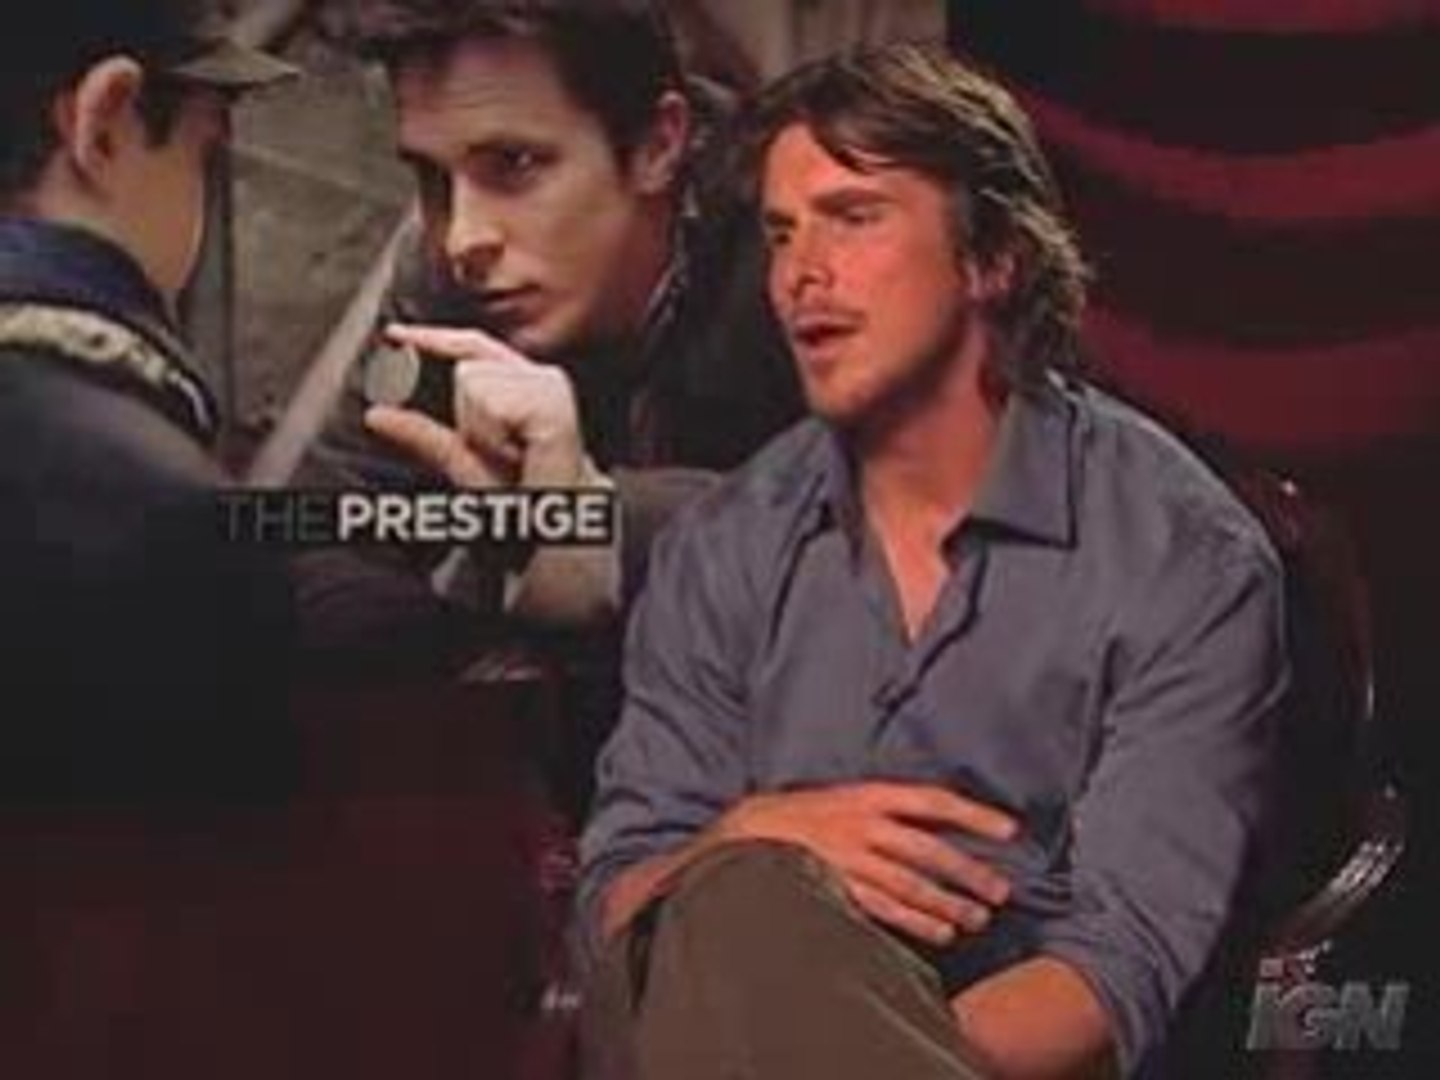 The Prestige / Interview #4 (Christian Bale)